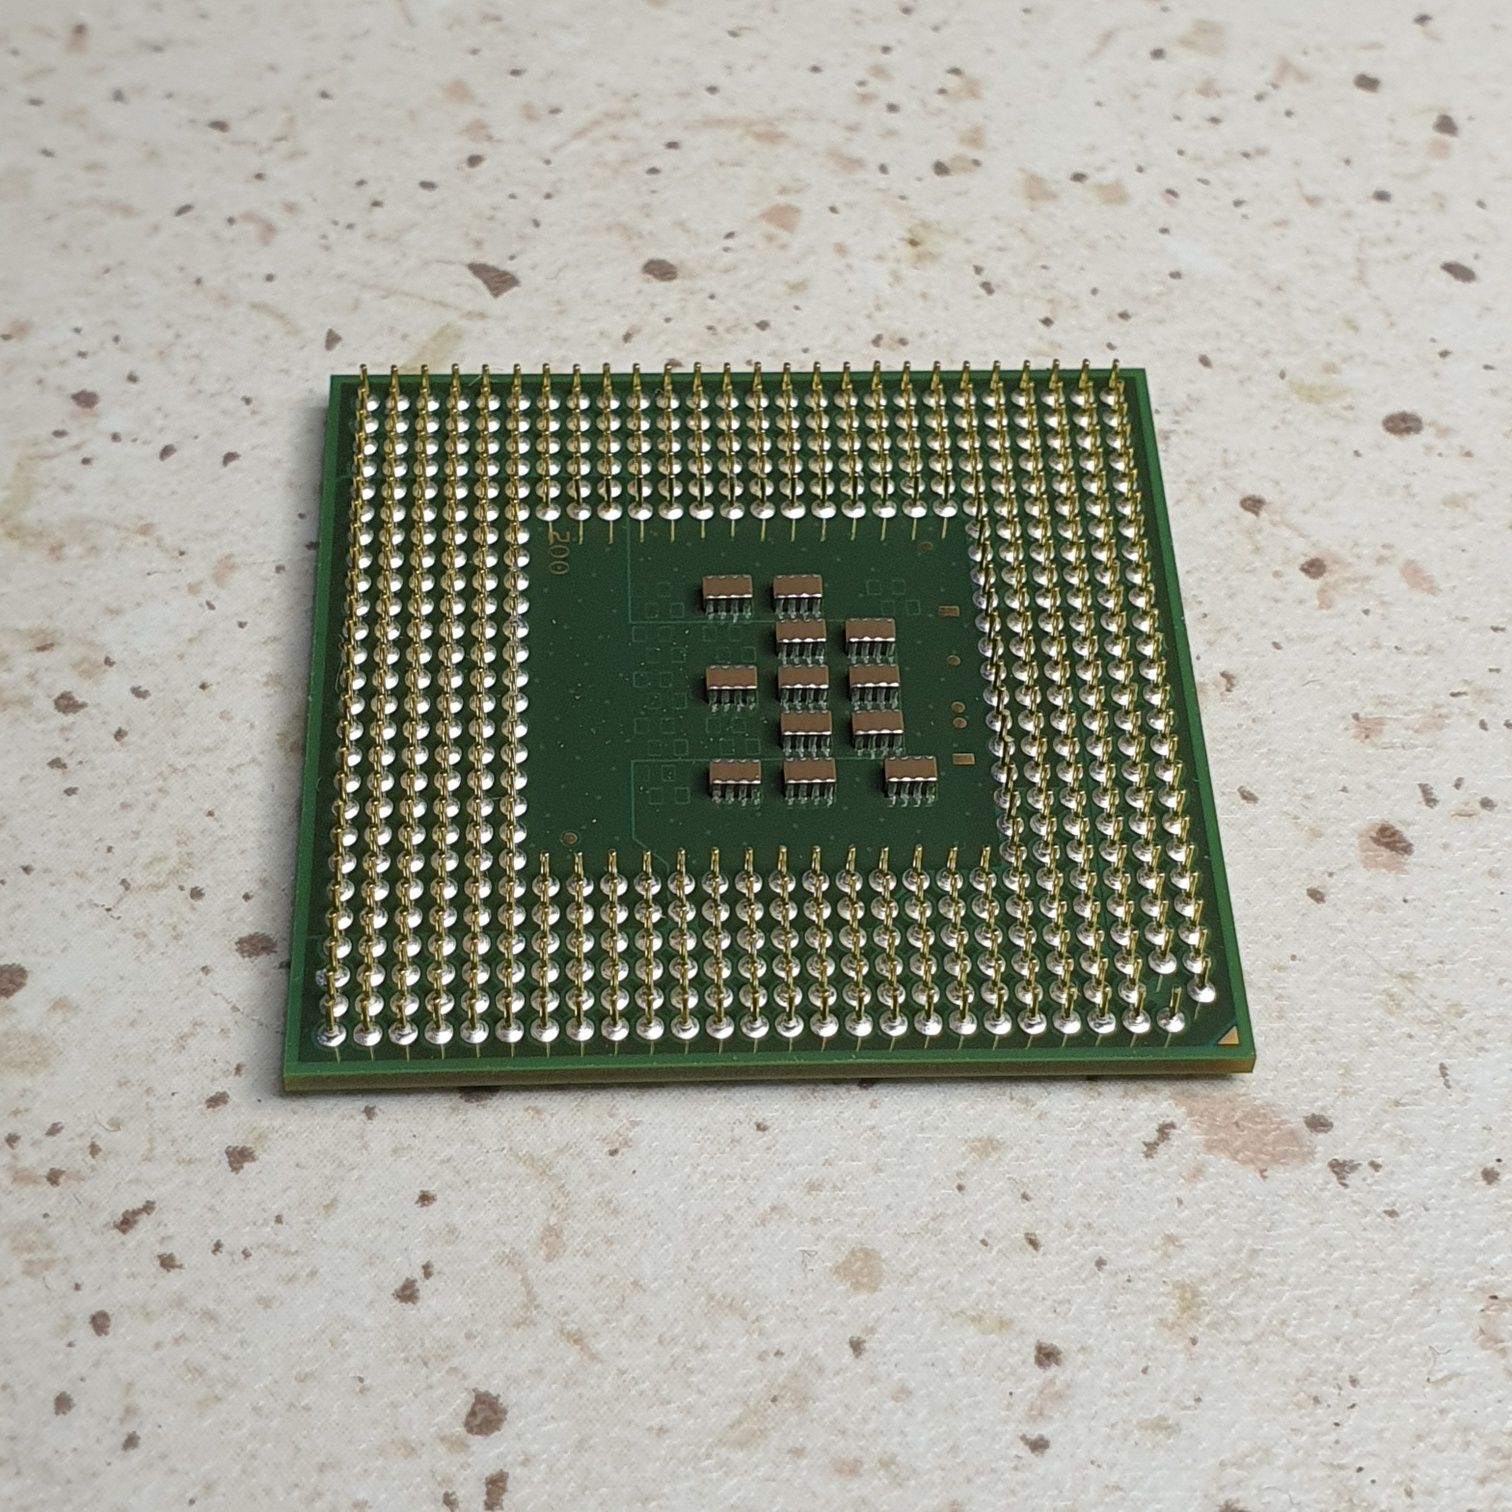 Procesor Intel Pentium M 730 1,6GHz SL86G mPGA478